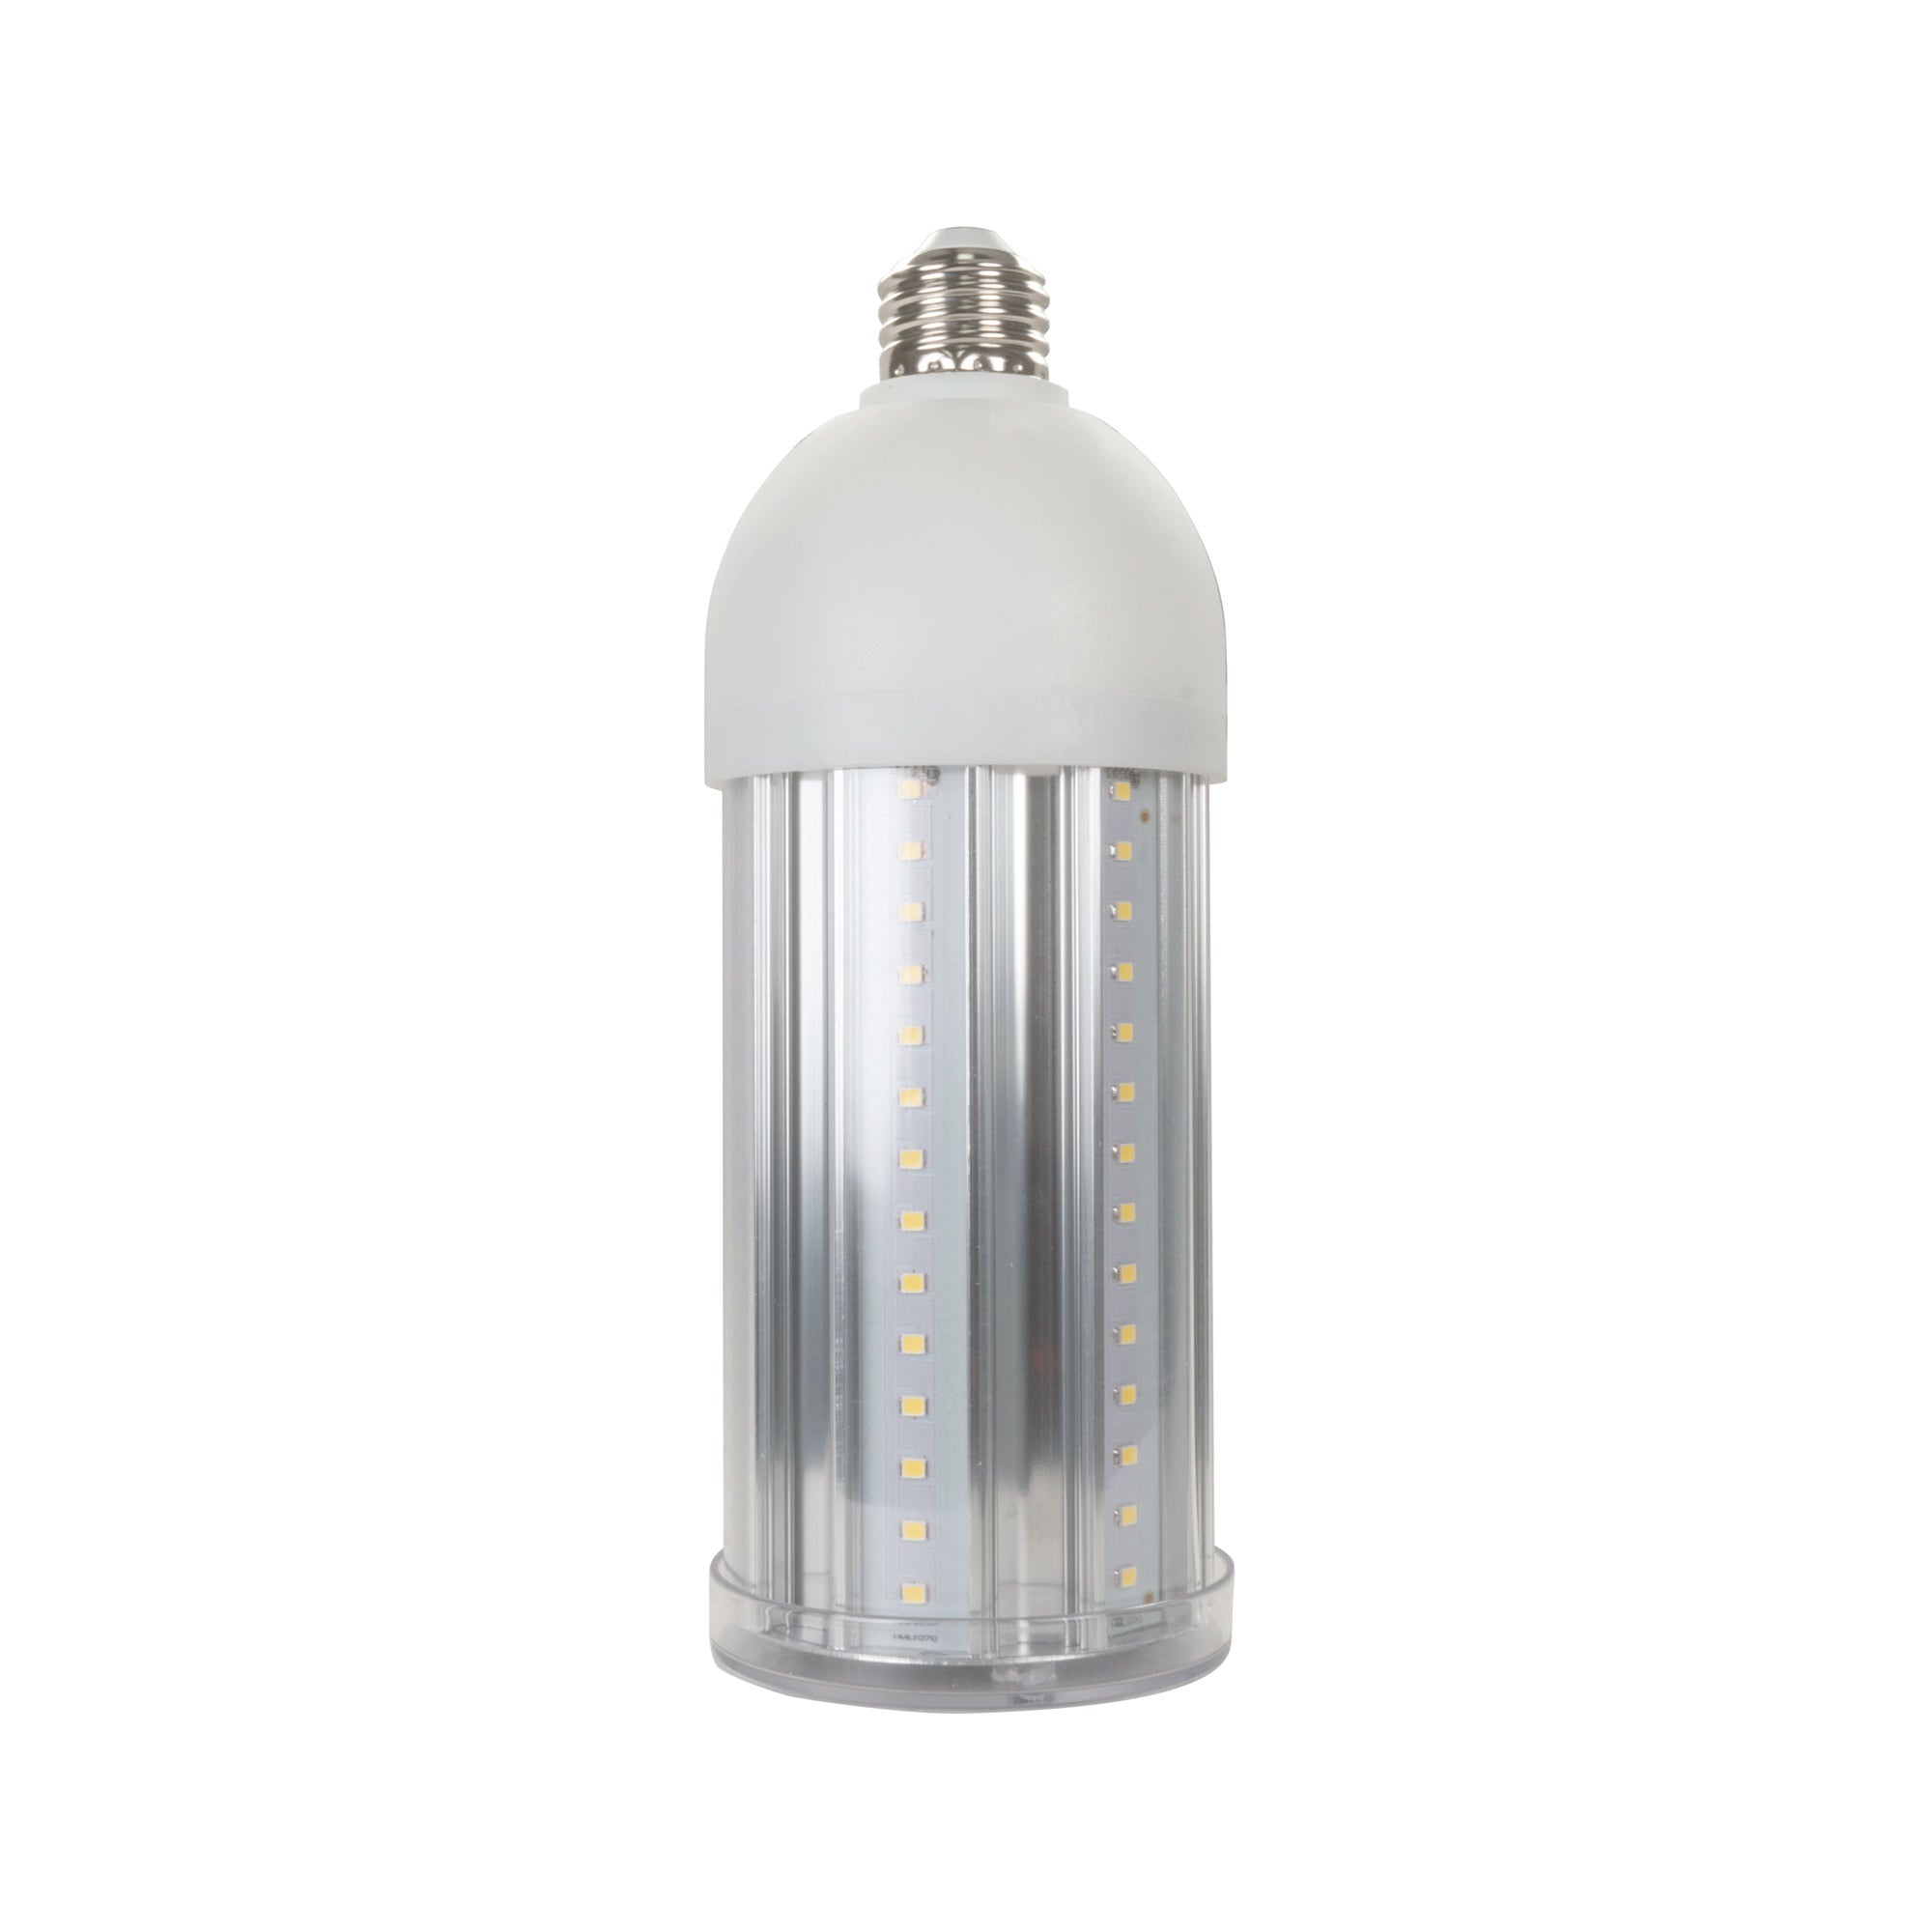 5000 Lumen LED Corn Cob Bulb, 50-Watt, 300-Watt Equivalent, 5000K Daylight, E26 - 8 Pack Master Case